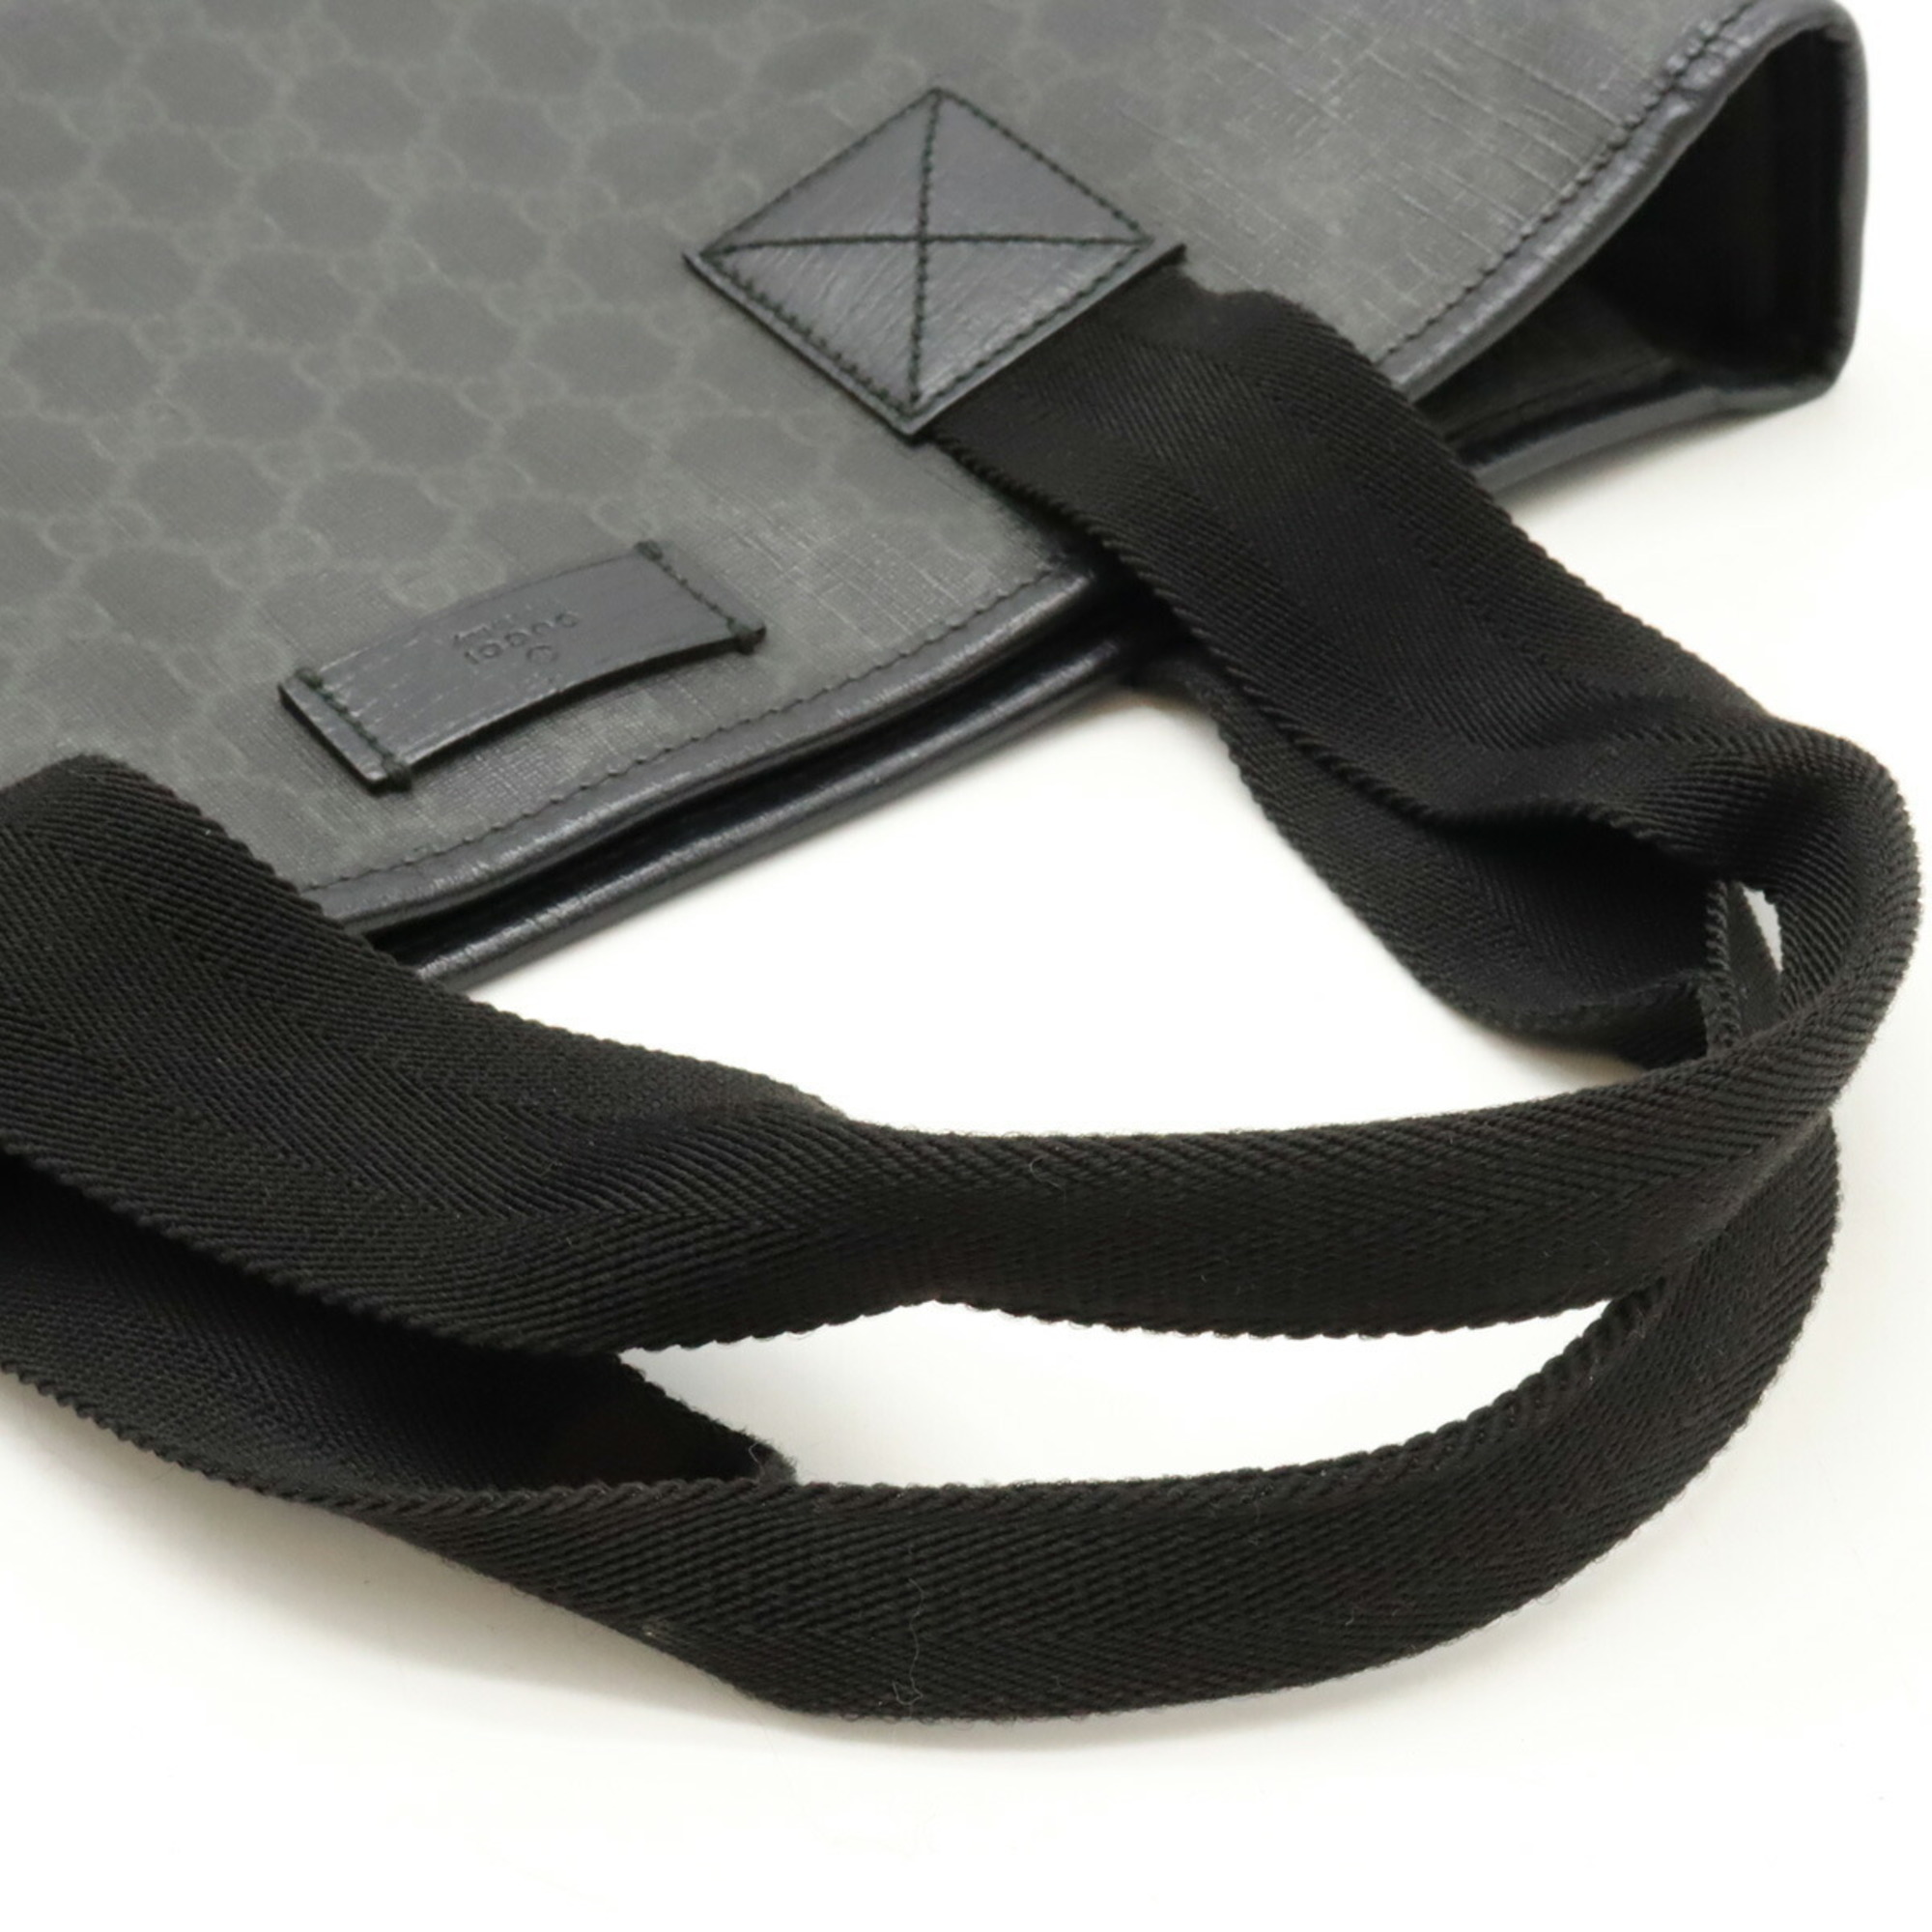 GUCCI GG Supreme Tote Bag Shoulder PVC Leather Dark Gray Black 162163